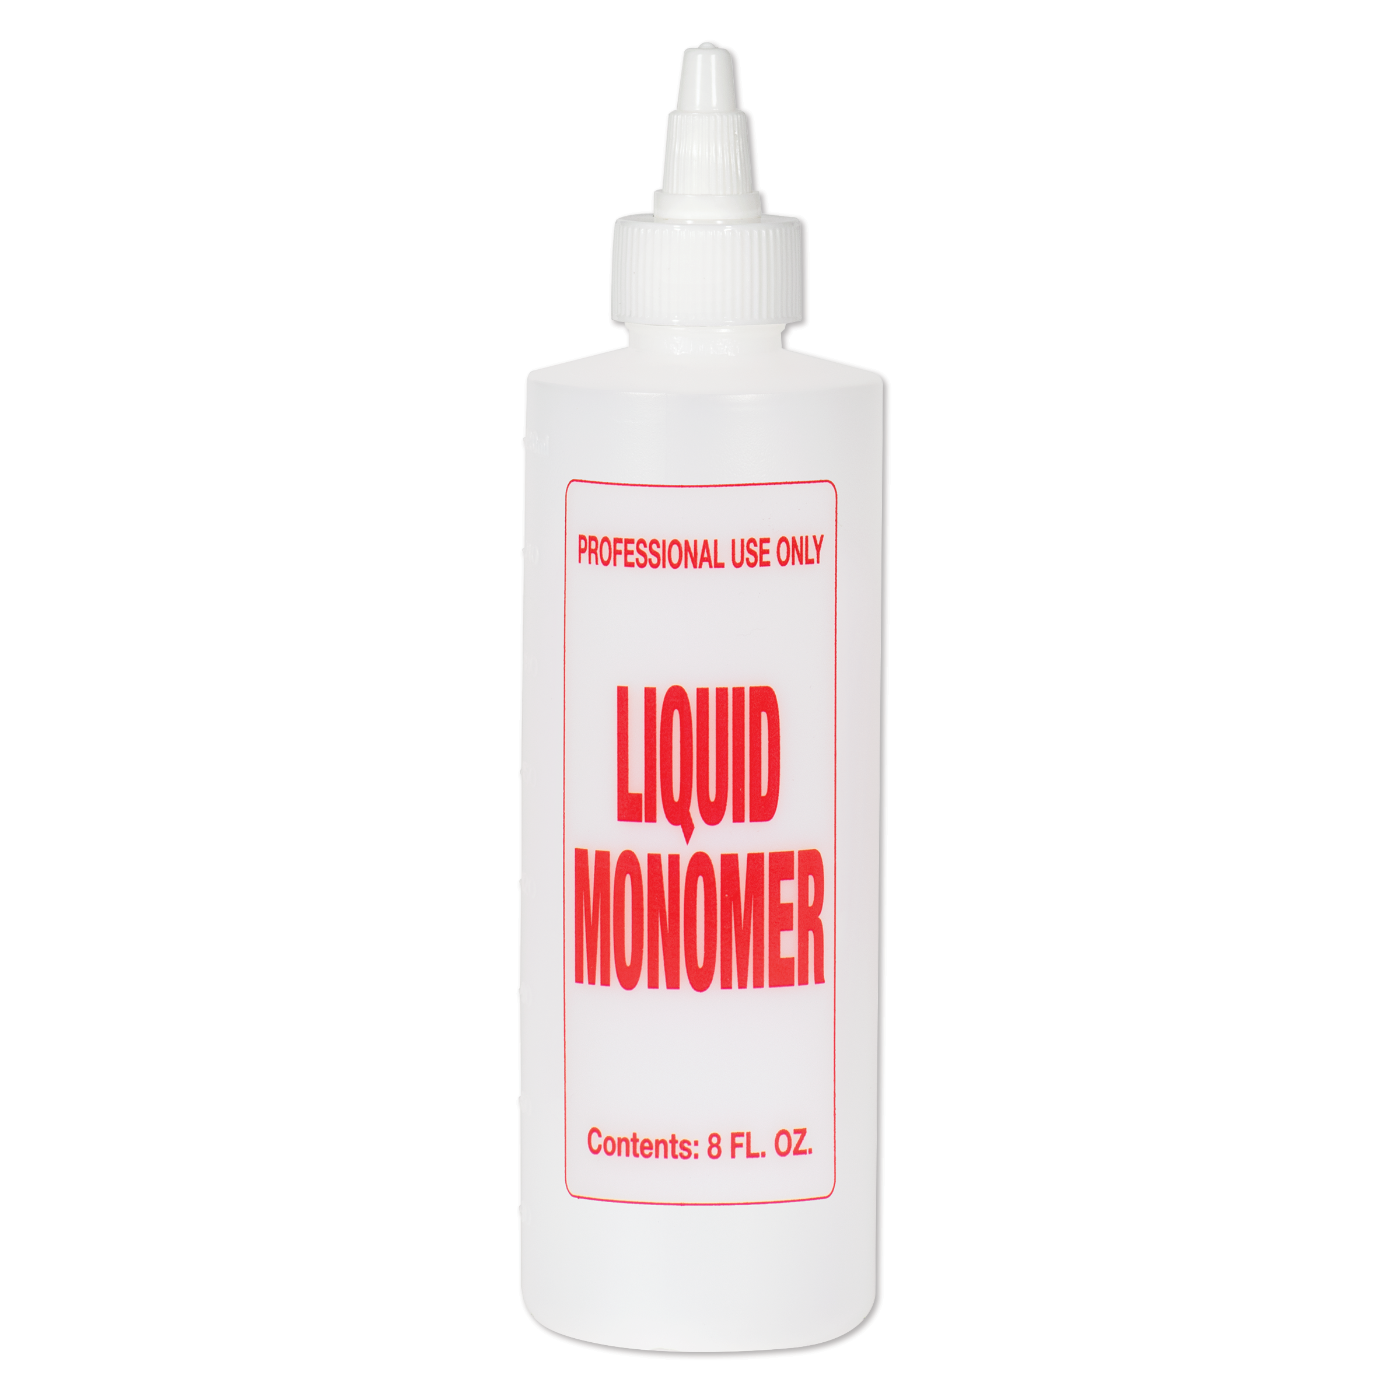 Imprinted Twist Top Bottle, Liquid Monomer, 8 oz.